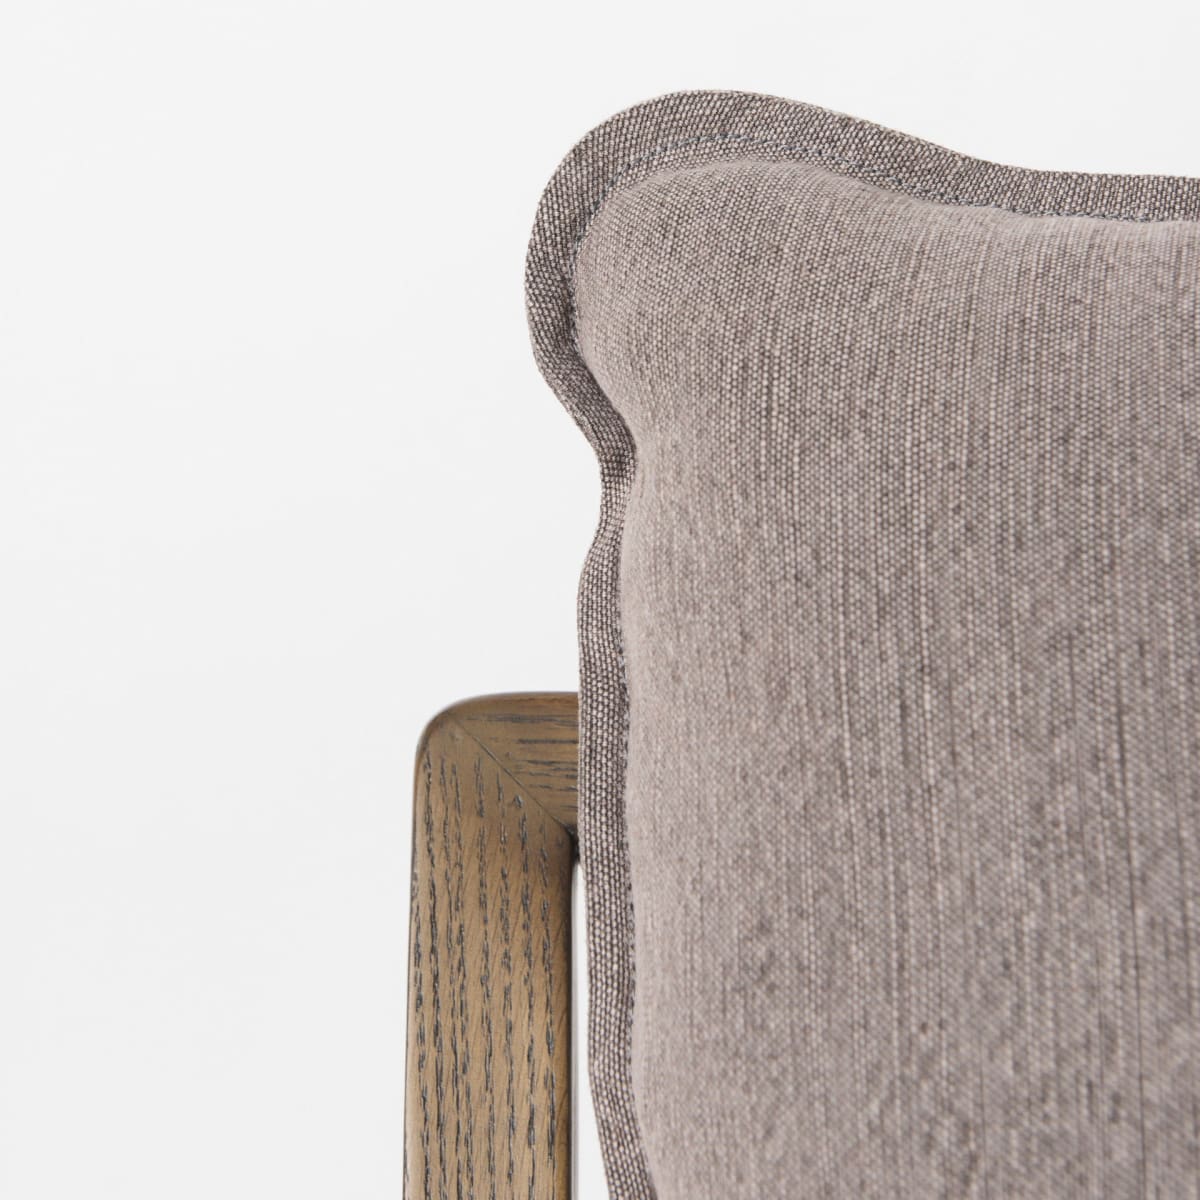 Furniture Barn - Brayden Accent Chair Gray Fabric